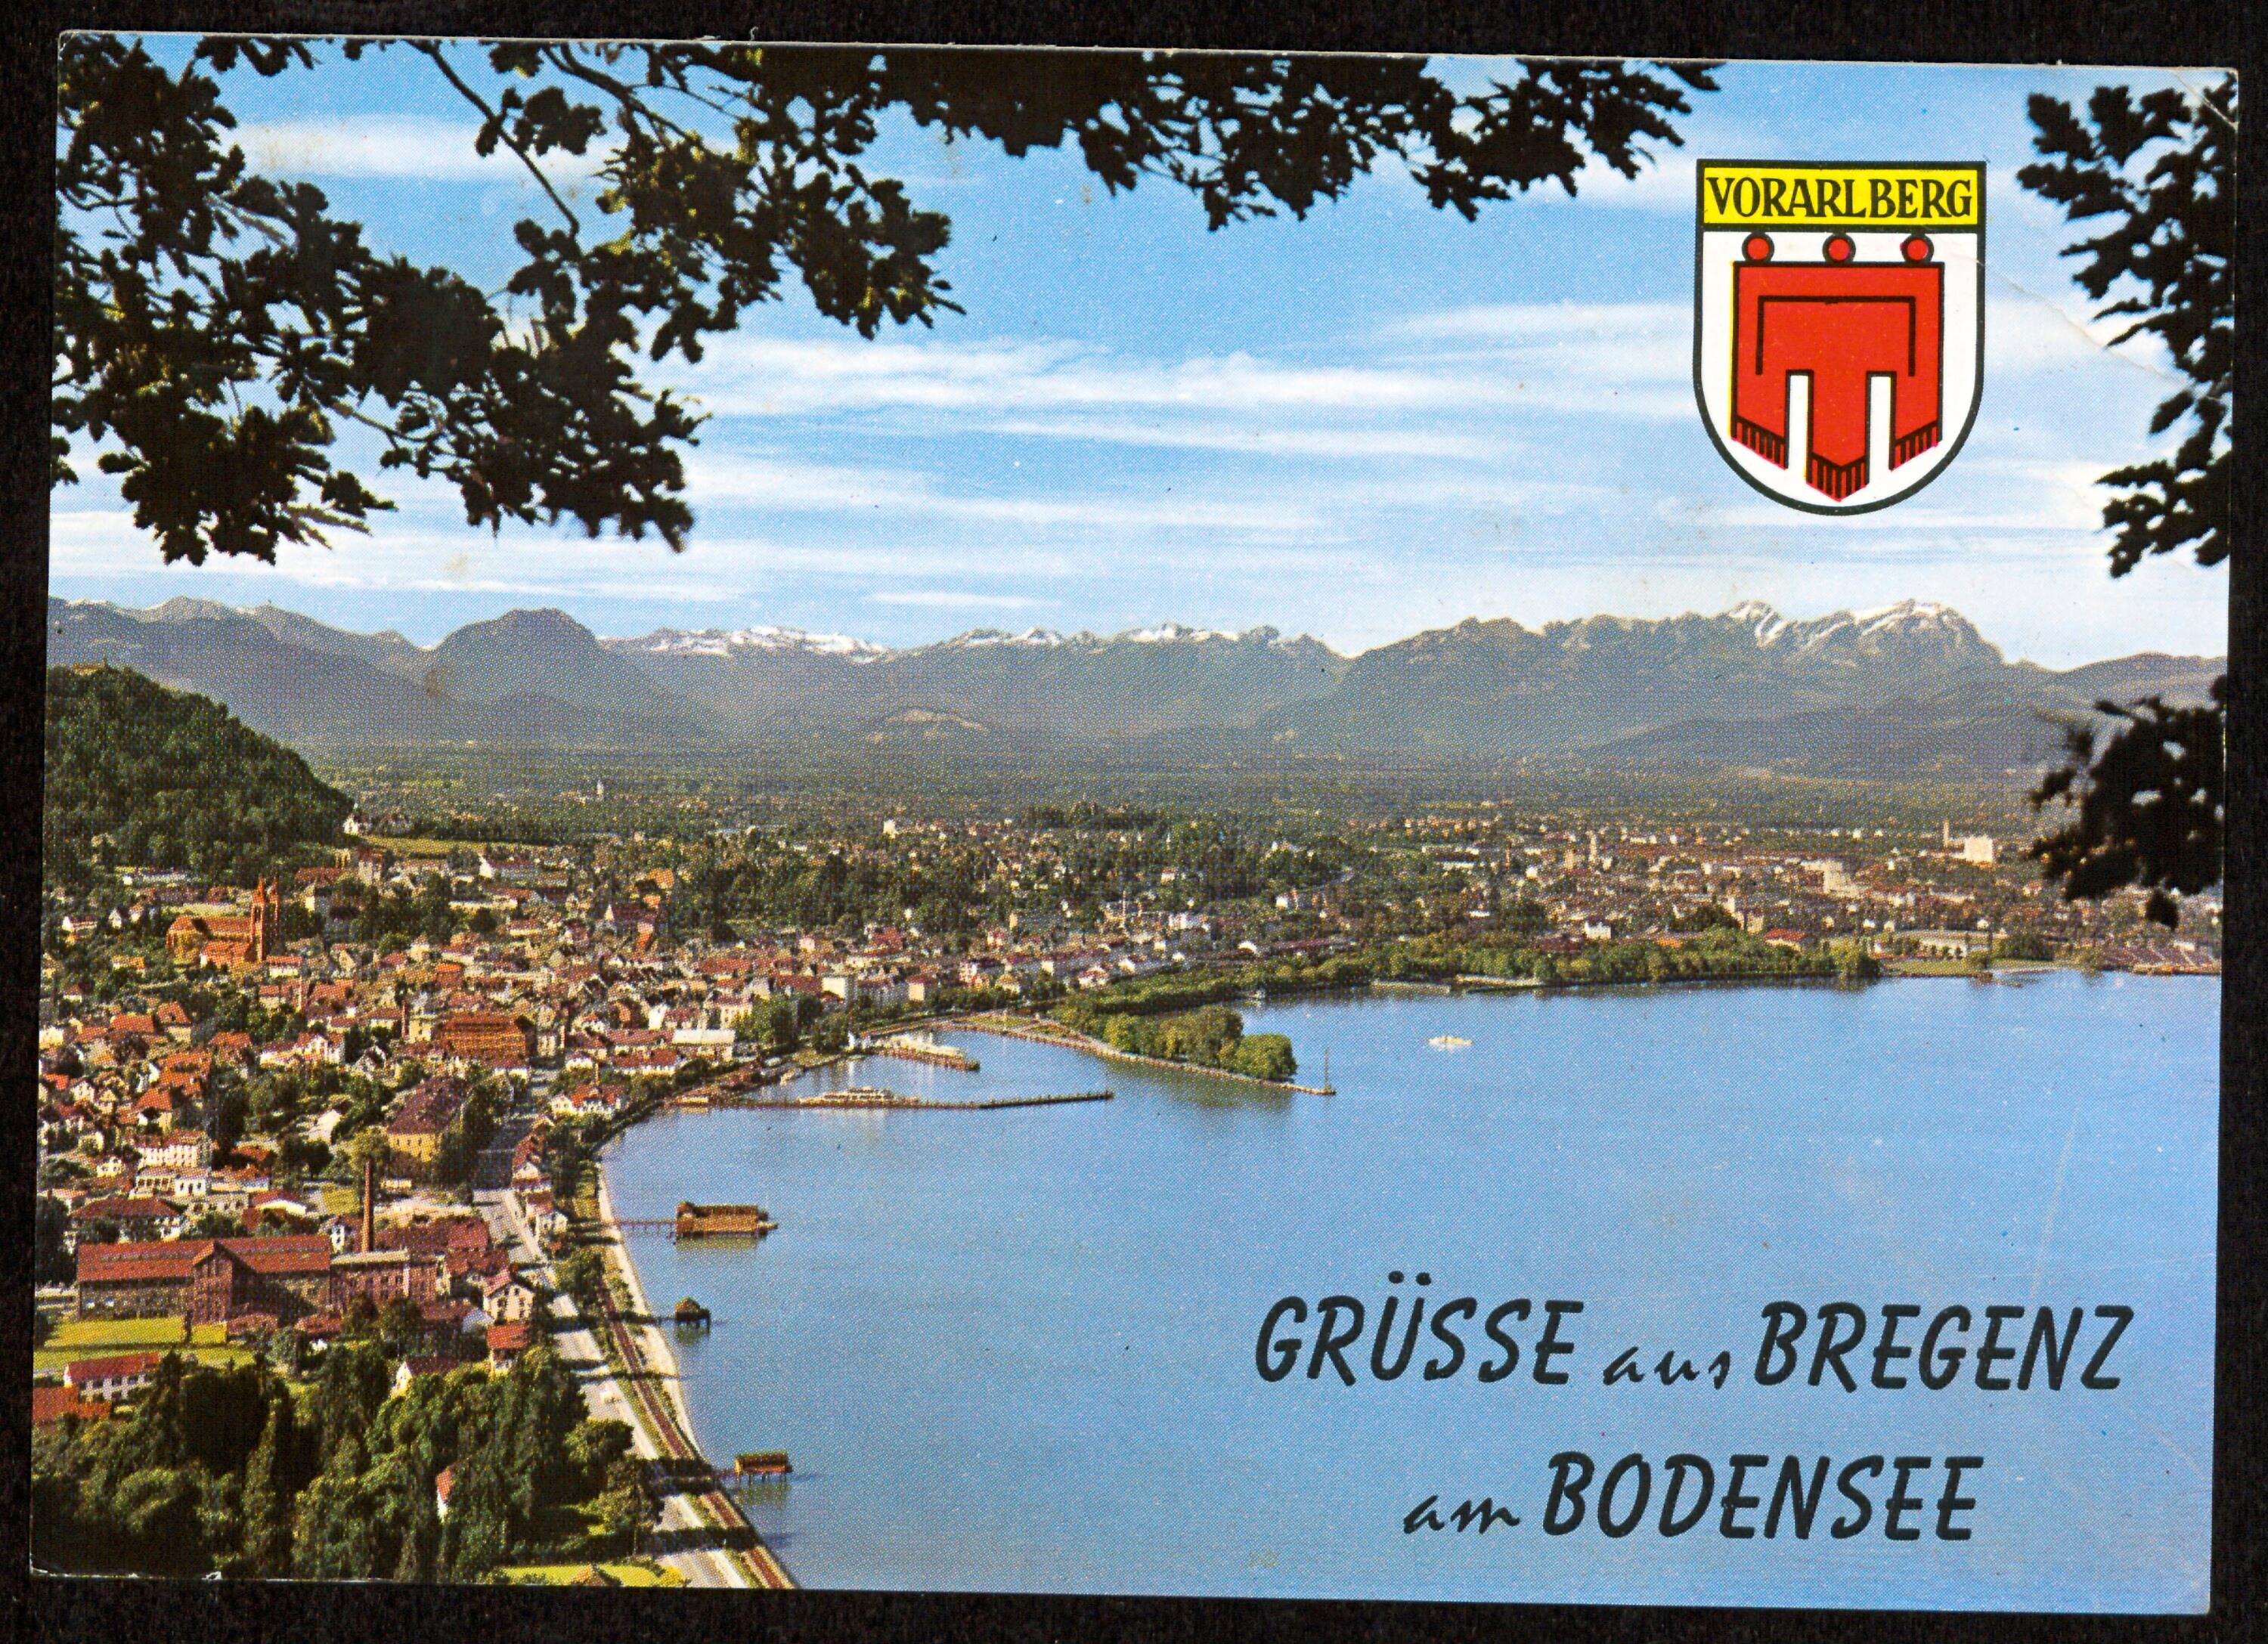 Grüsse aus Bregenz am Bodensee></div>


    <hr>
    <div class=